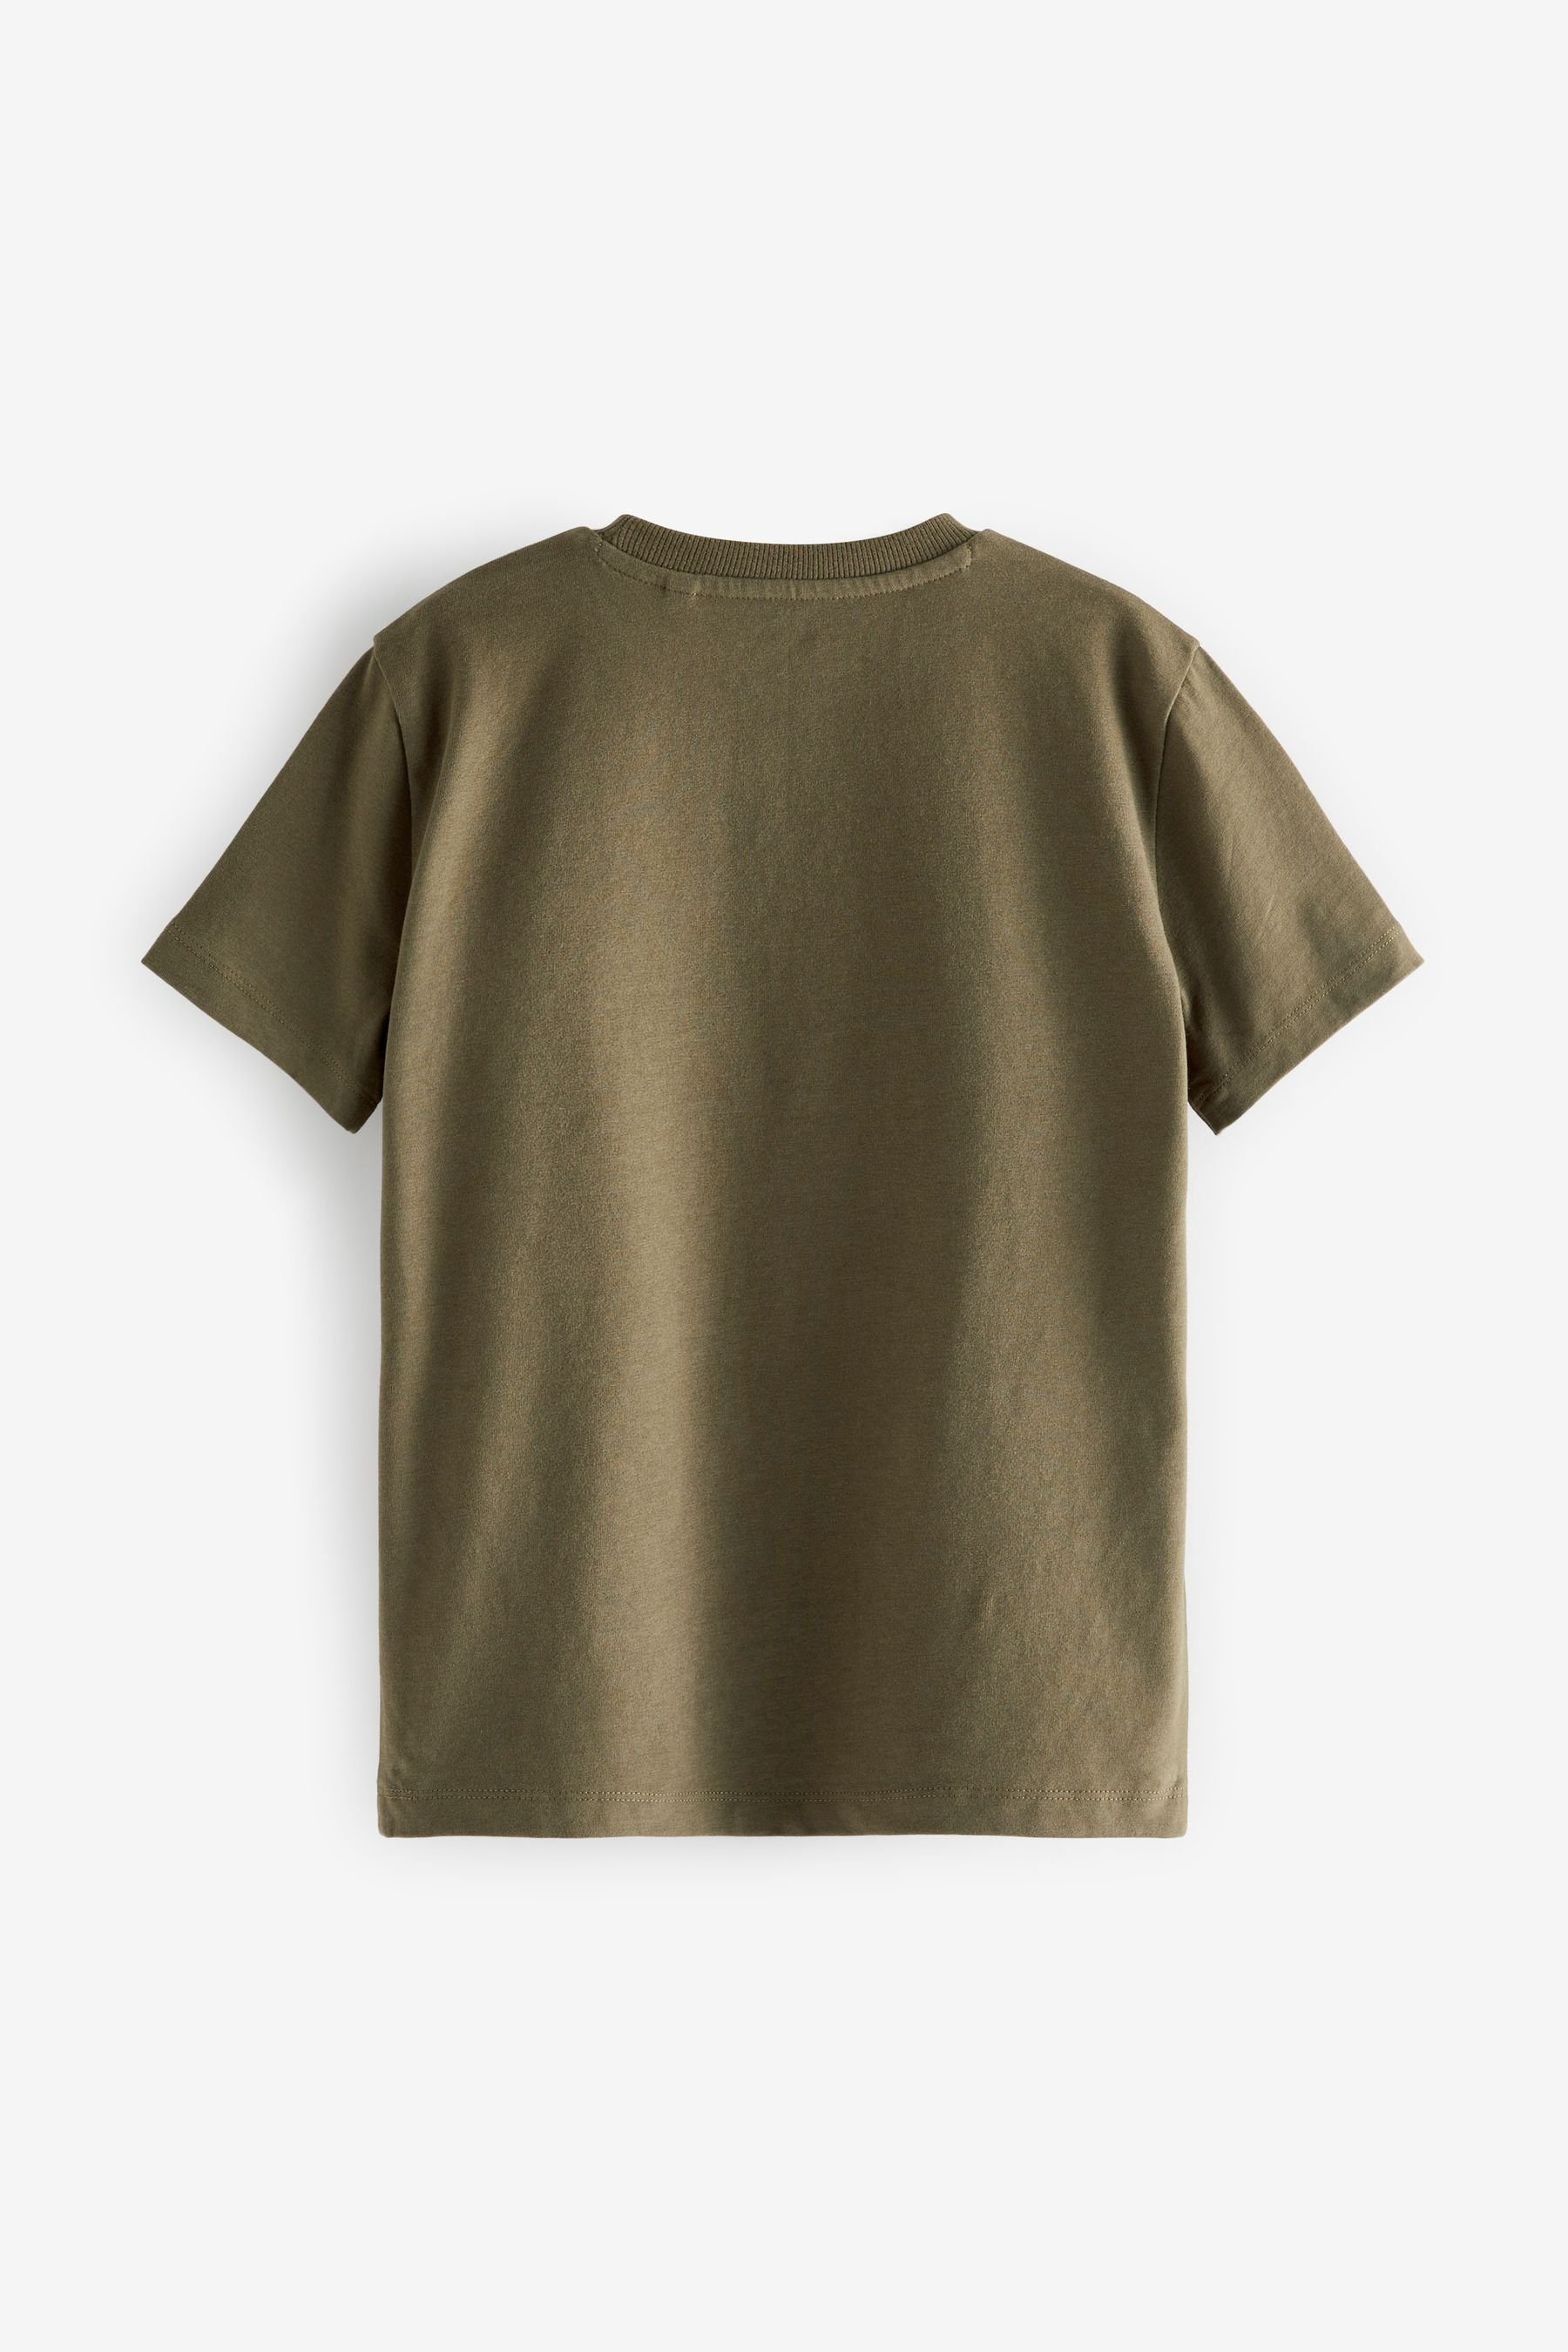 Green/Tan Grey/Black/Khaki Kurzarm-T-Shirts (4-tlg) T-Shirt mit Brown Next 4er-Pack Hirsch-Stickerei